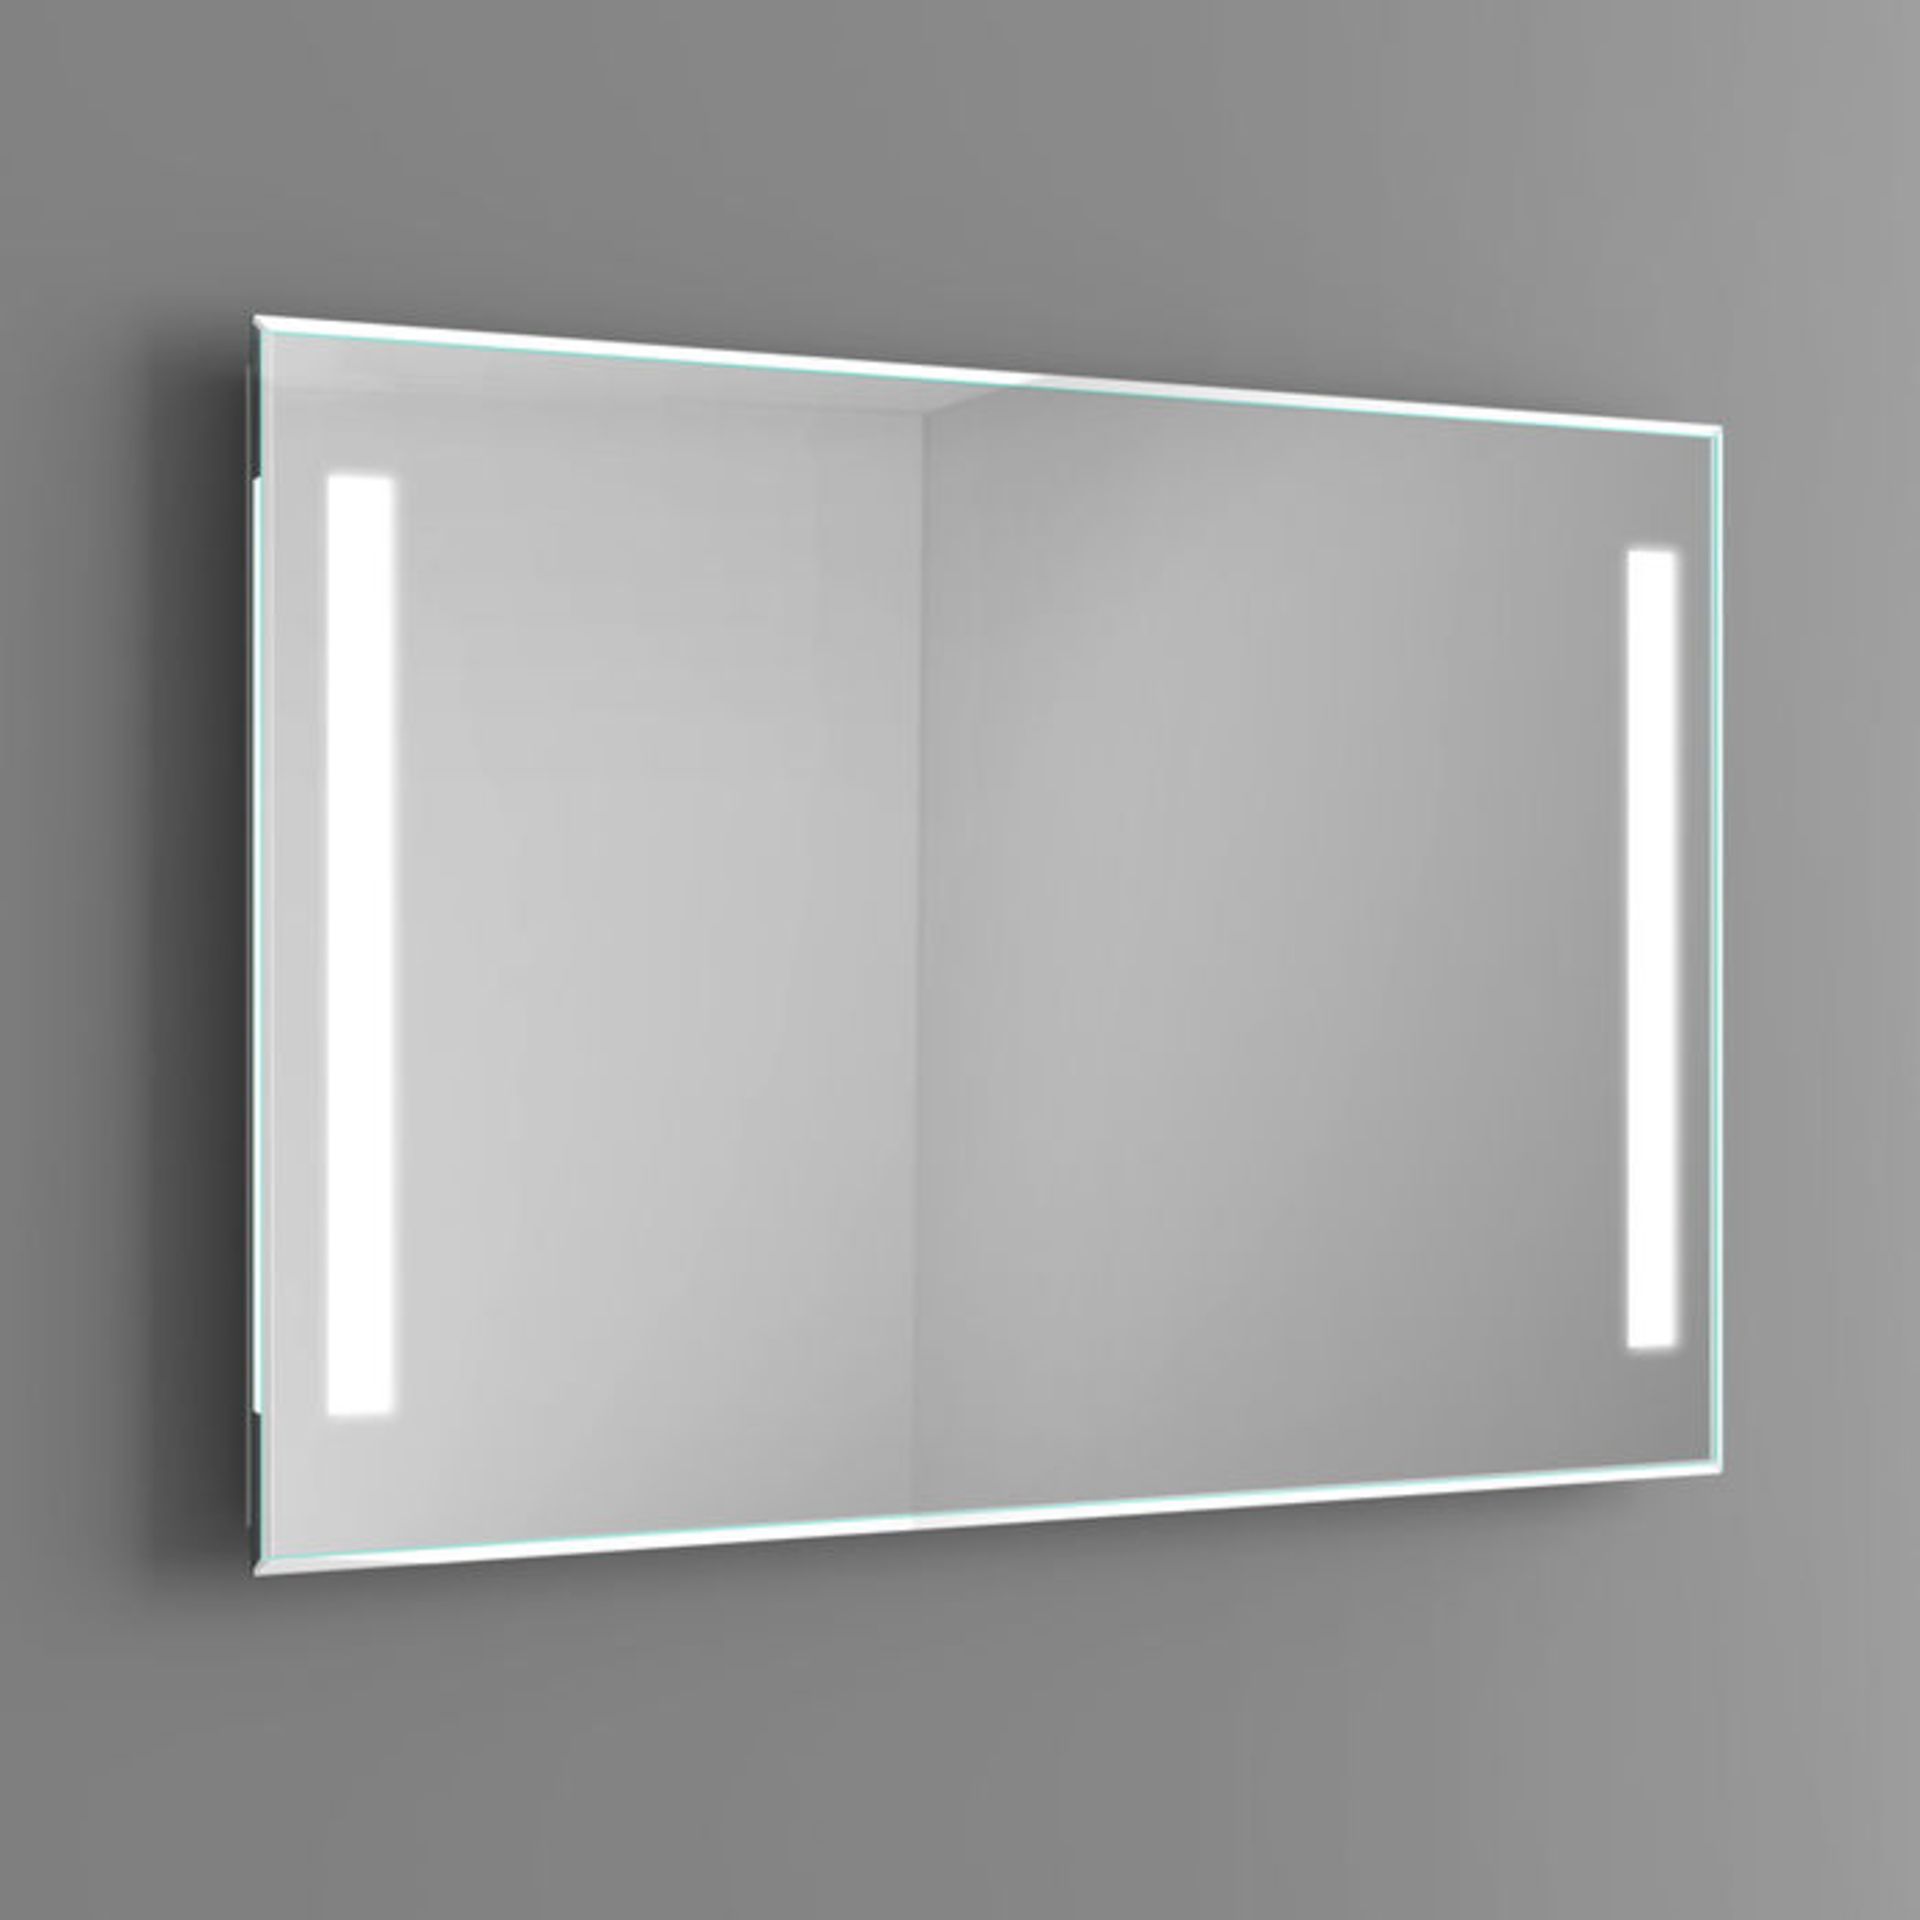 (GR20) 1000x600mm Omega Illuminated LED Mirror RRP £349.99 Flattering LED lights provide a warm glow - Image 3 of 3